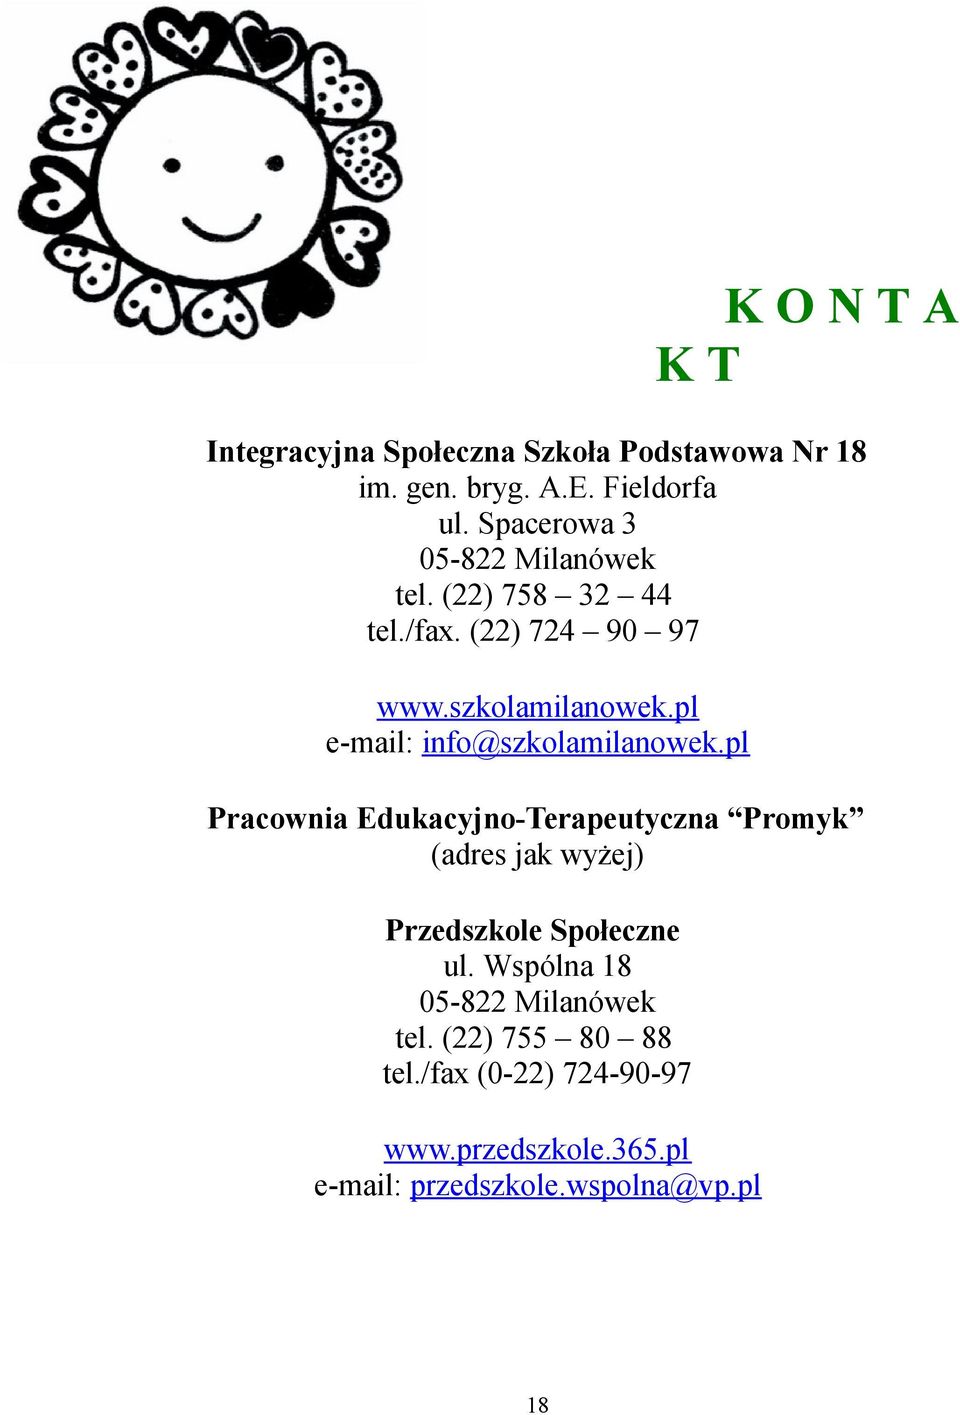 pl e-mail: info@szkolamilanowek.